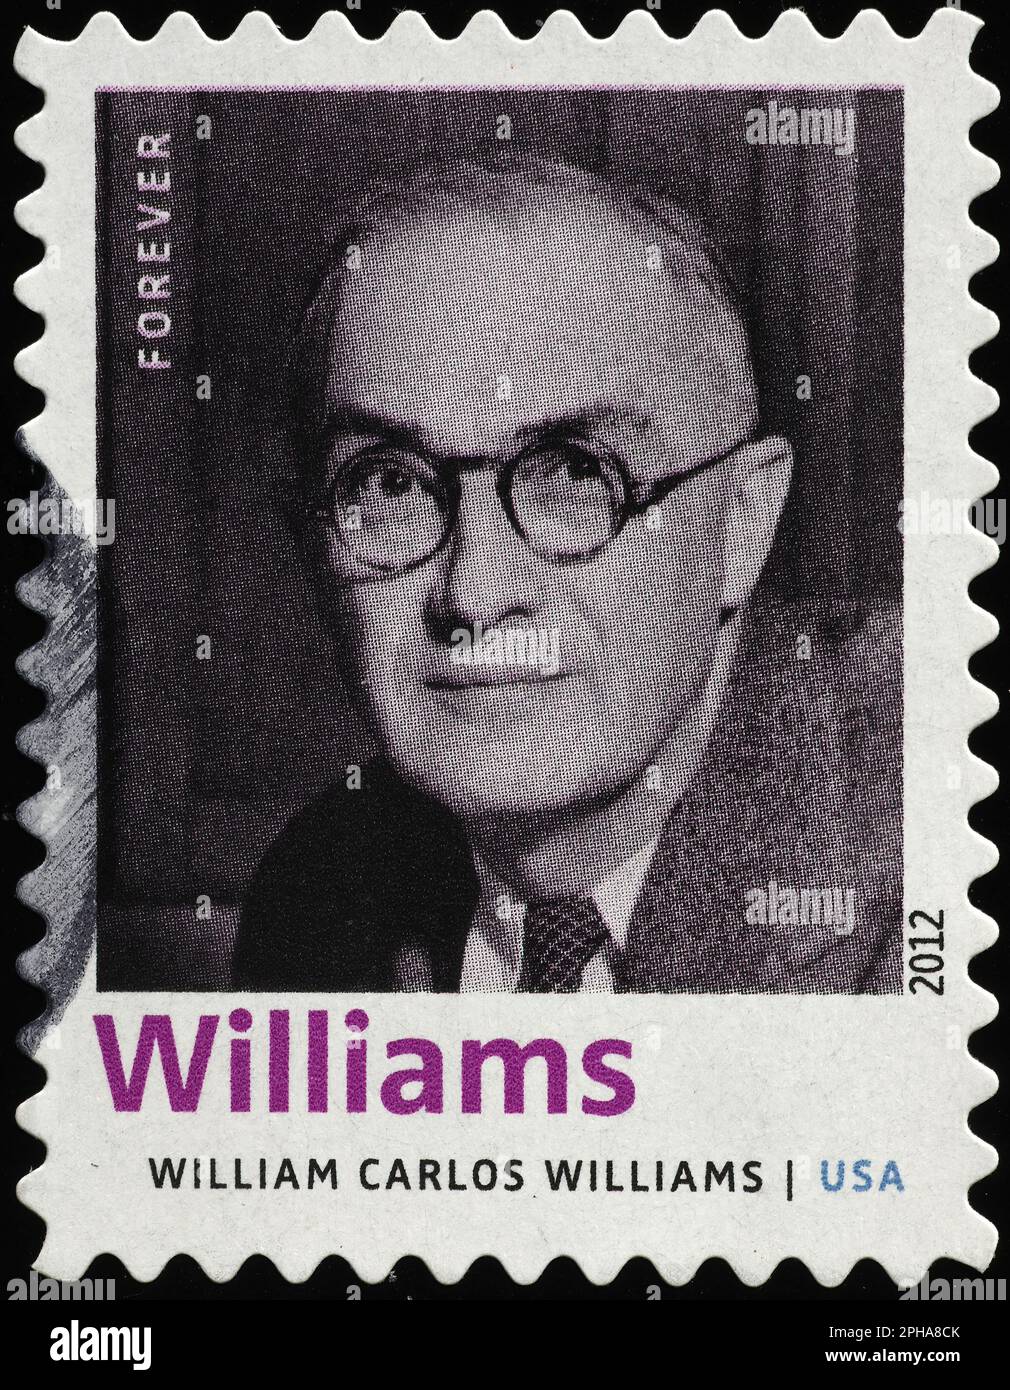 William Carlos Williams on american postage stamp Stock Photo